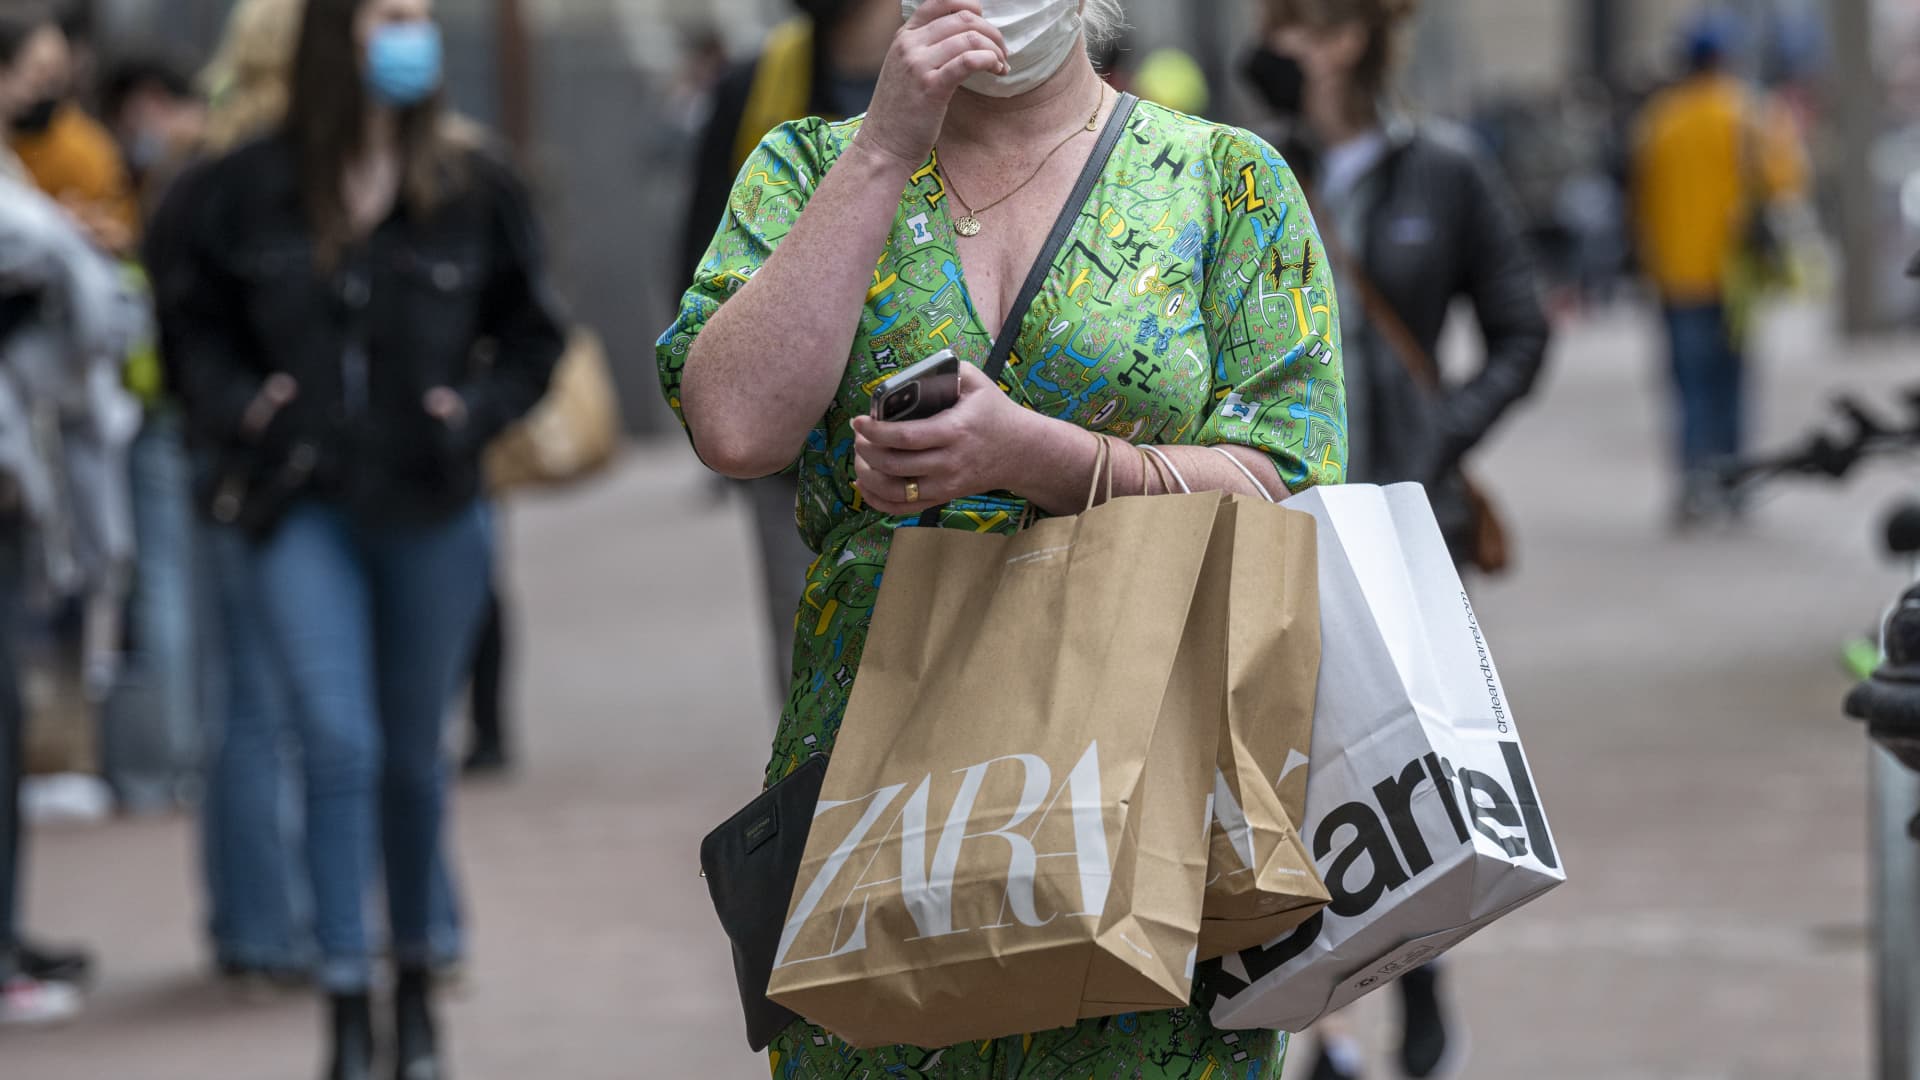 A pedestrian carries Zara shopping bags in San Francisco, California, U.S., on Thursday, Sept. 16, 2021.